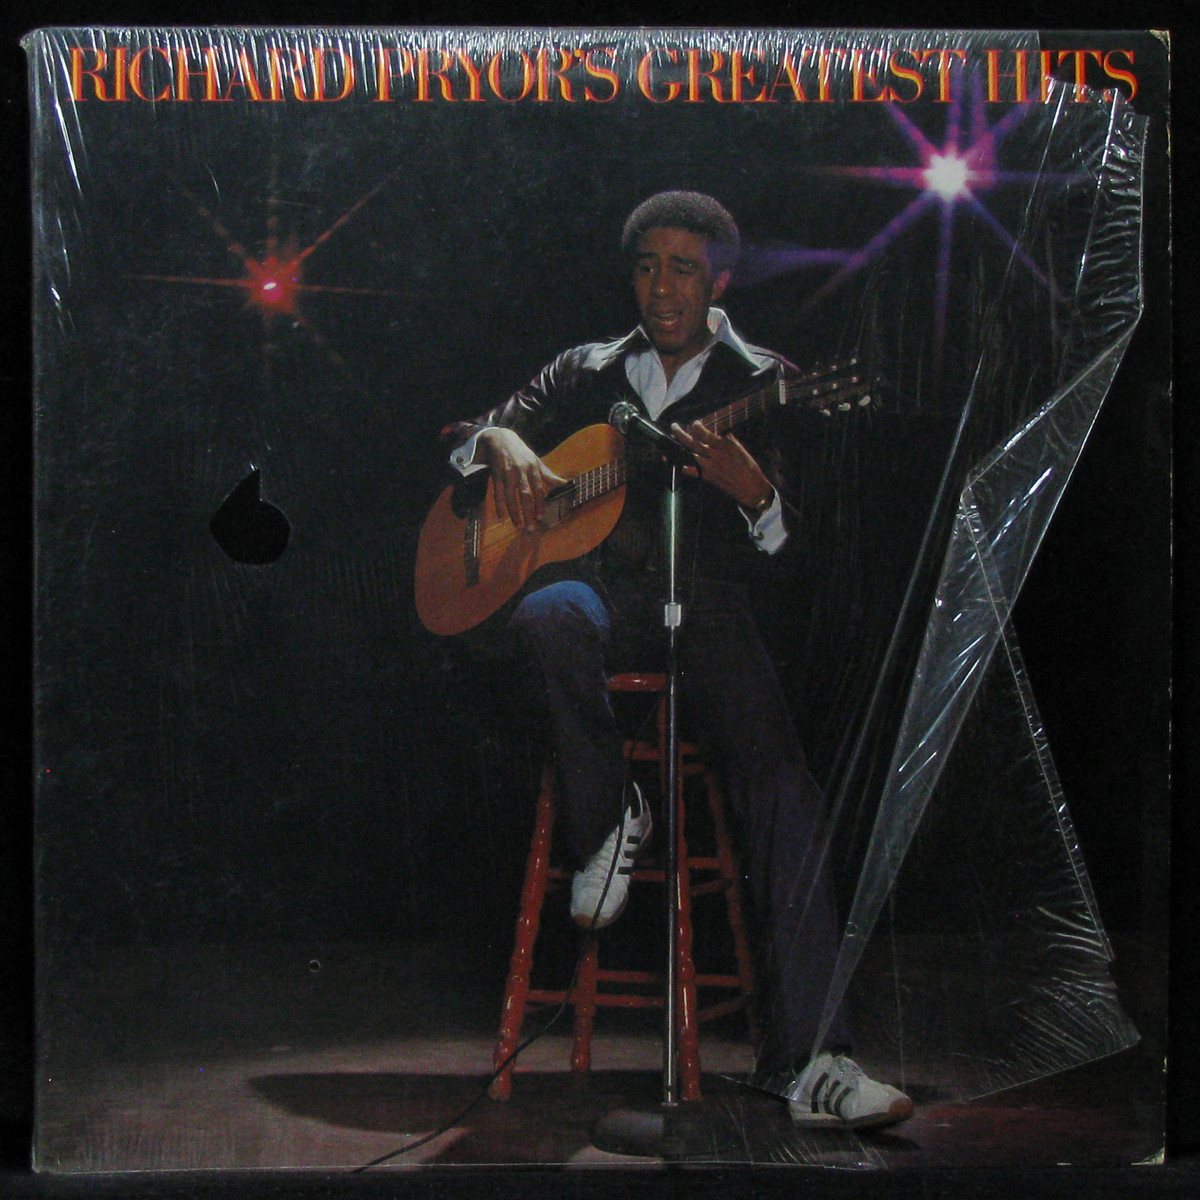 Richard Pryor's Greatest Hits